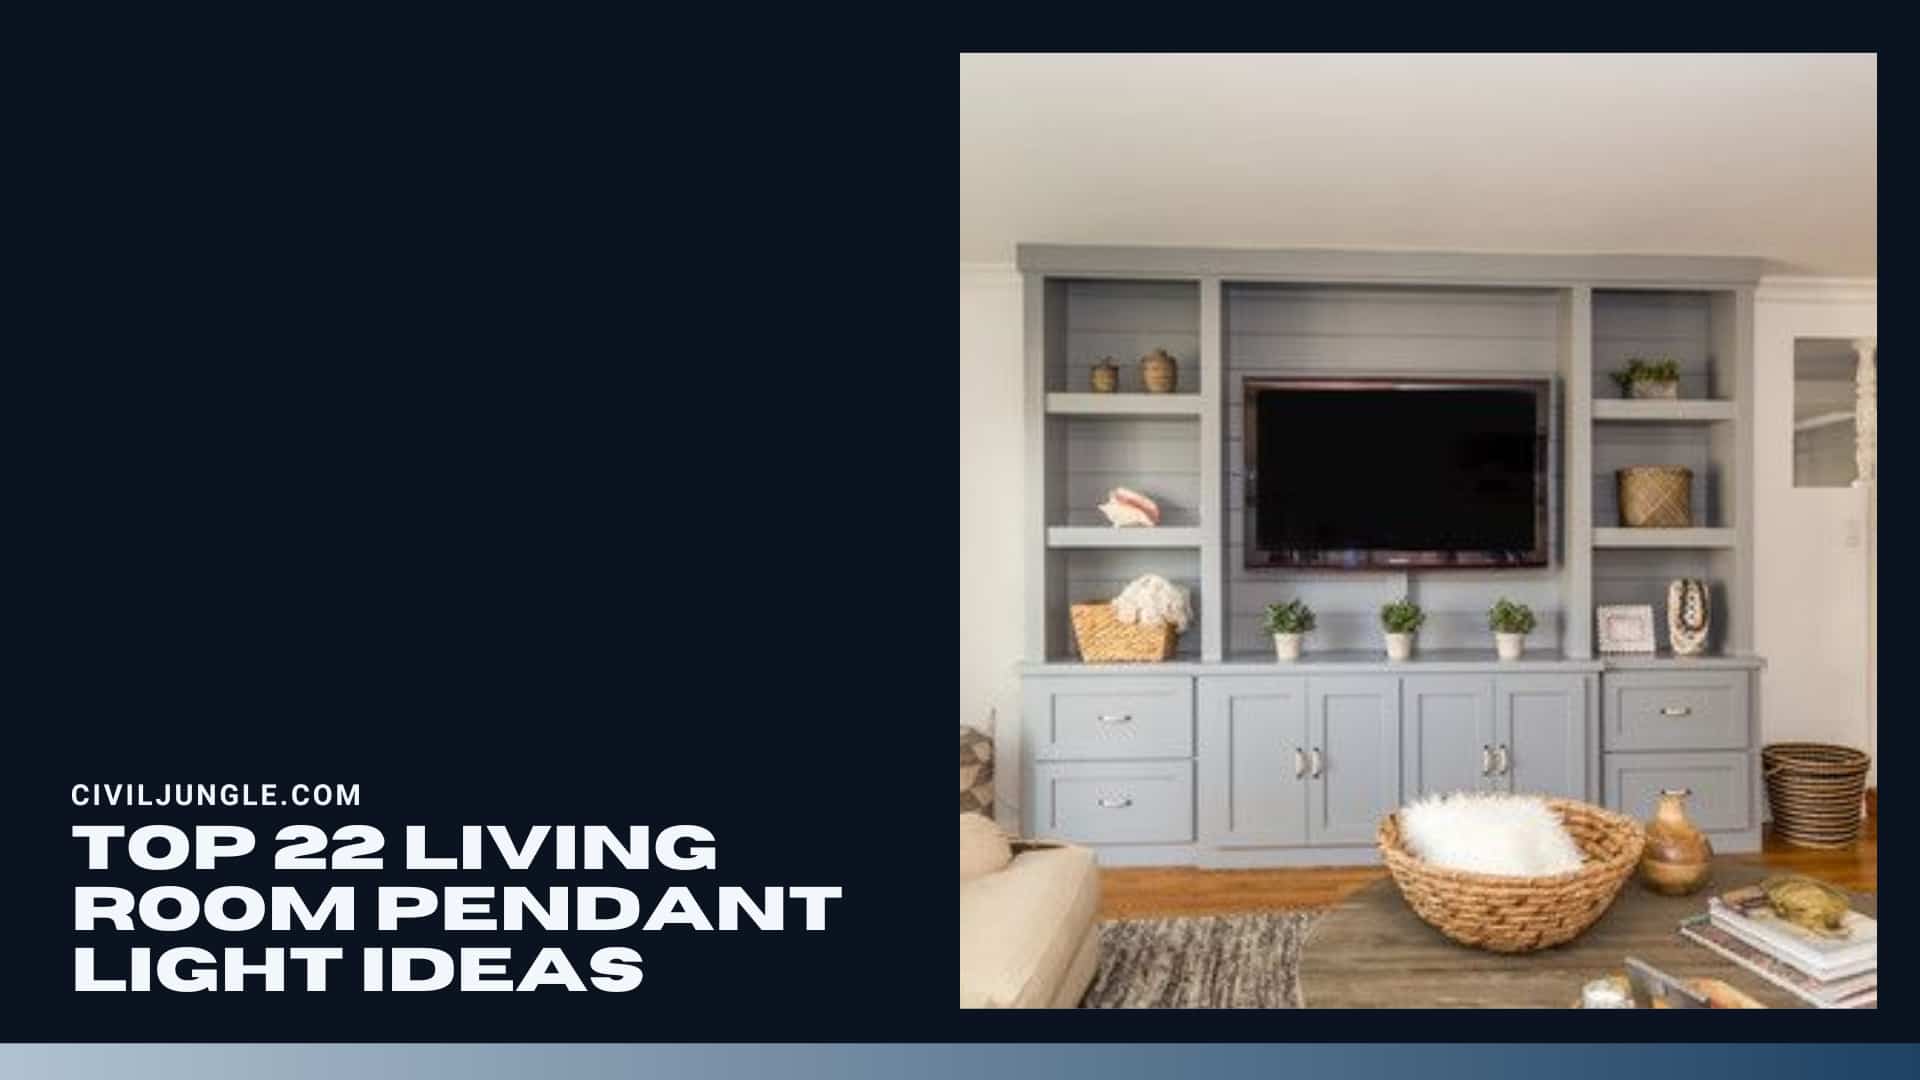 Top 22 Living Room Pendant Light Ideas